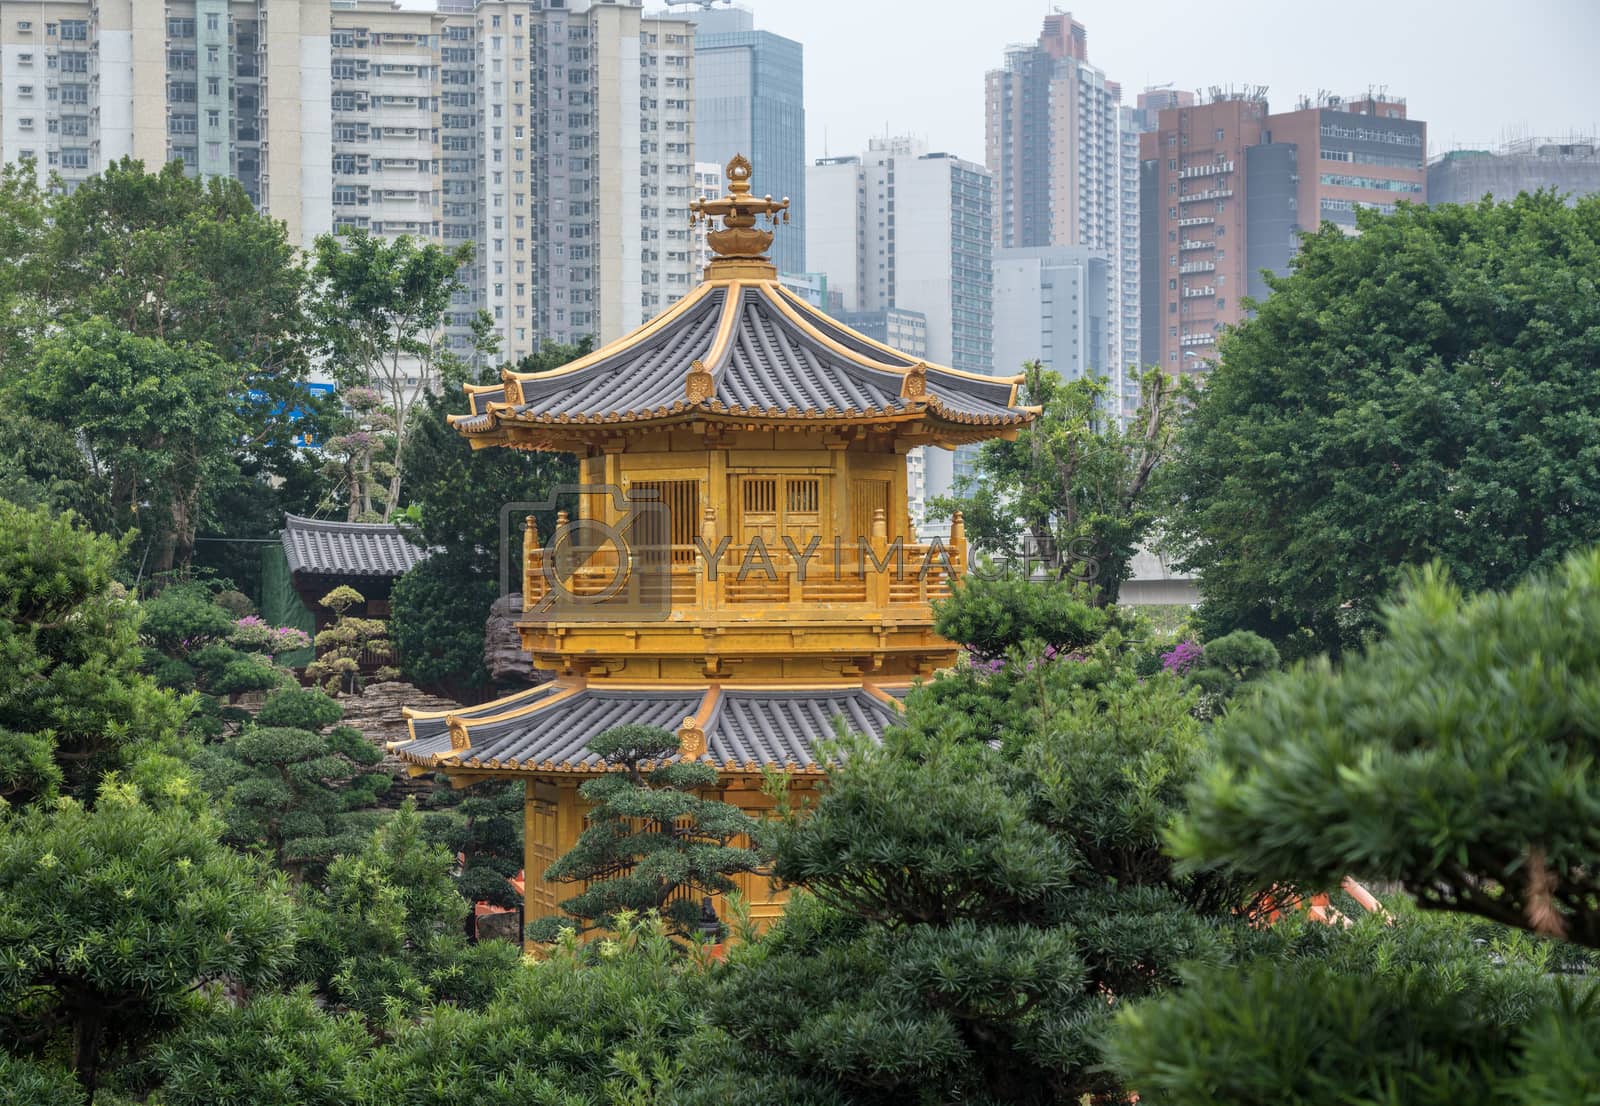 Royalty free image of Nan Lian Garden in Diamond Hill area of Hong Kong by steheap